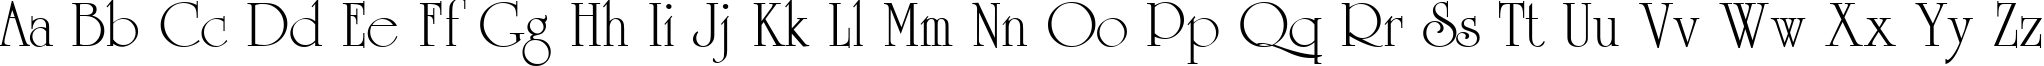 Пример написания английского алфавита шрифтом Unicorn